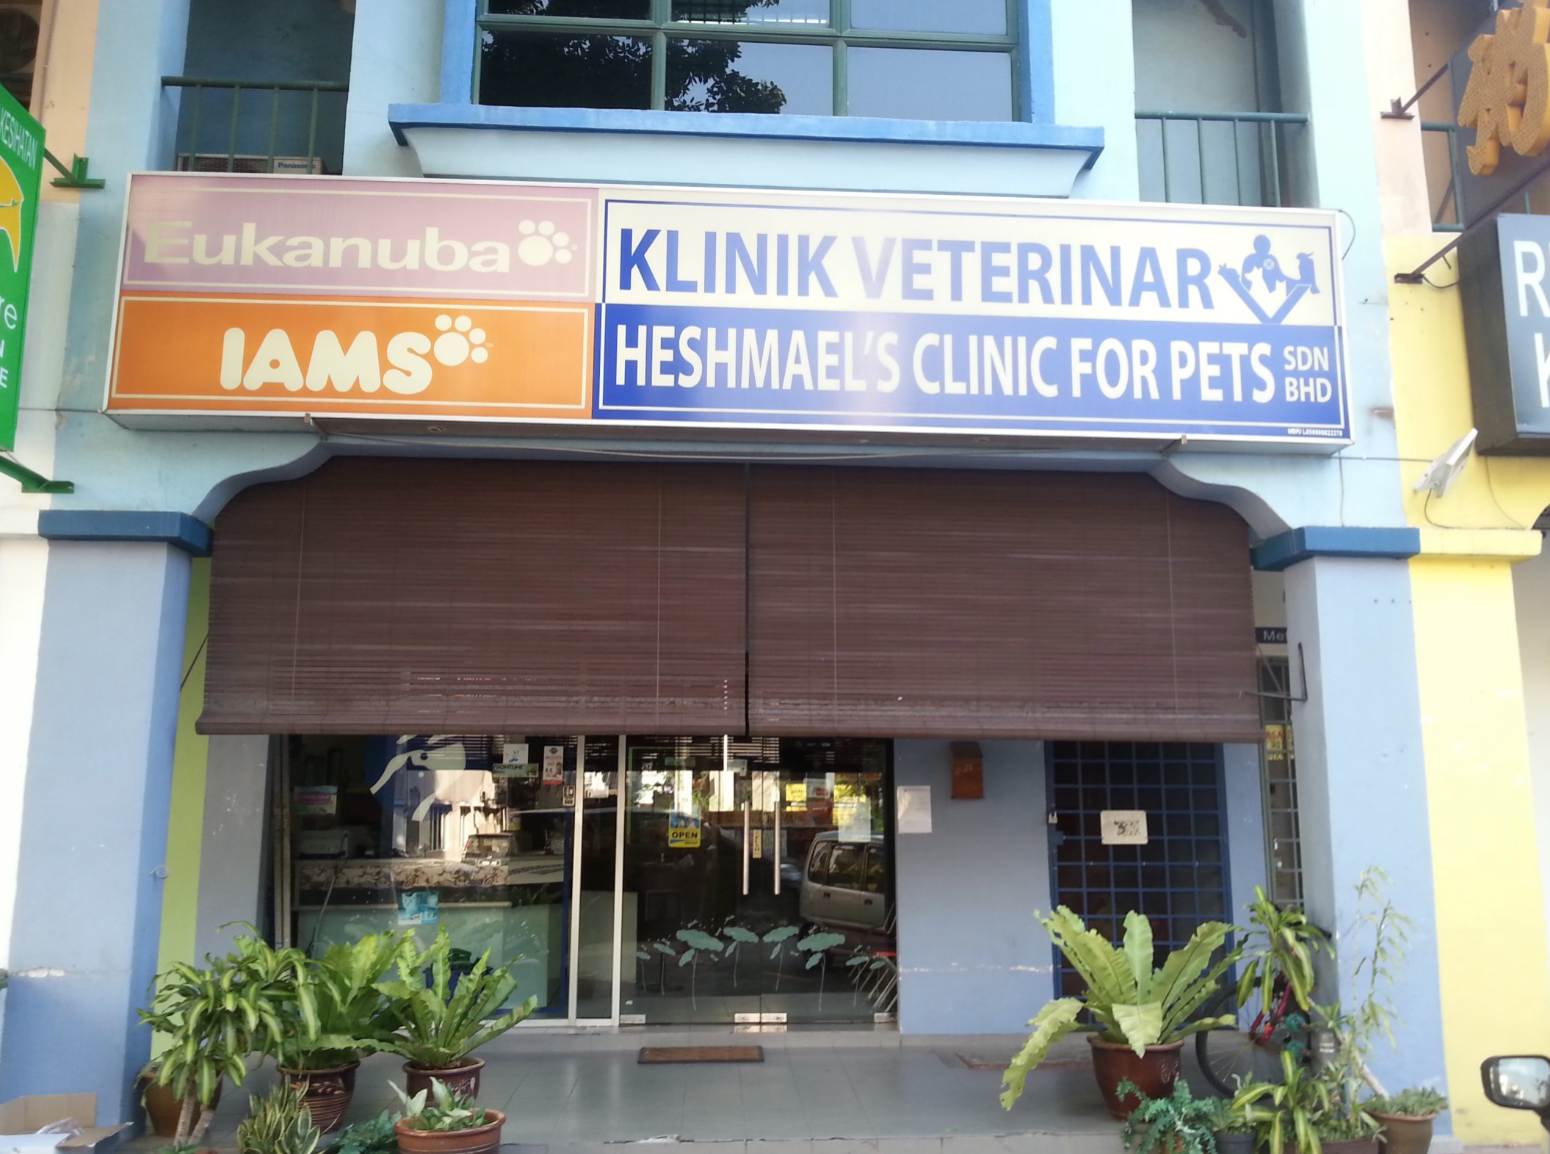 20 Veterinarians & Animal Hospitals In Klang Valley Sorted By Location